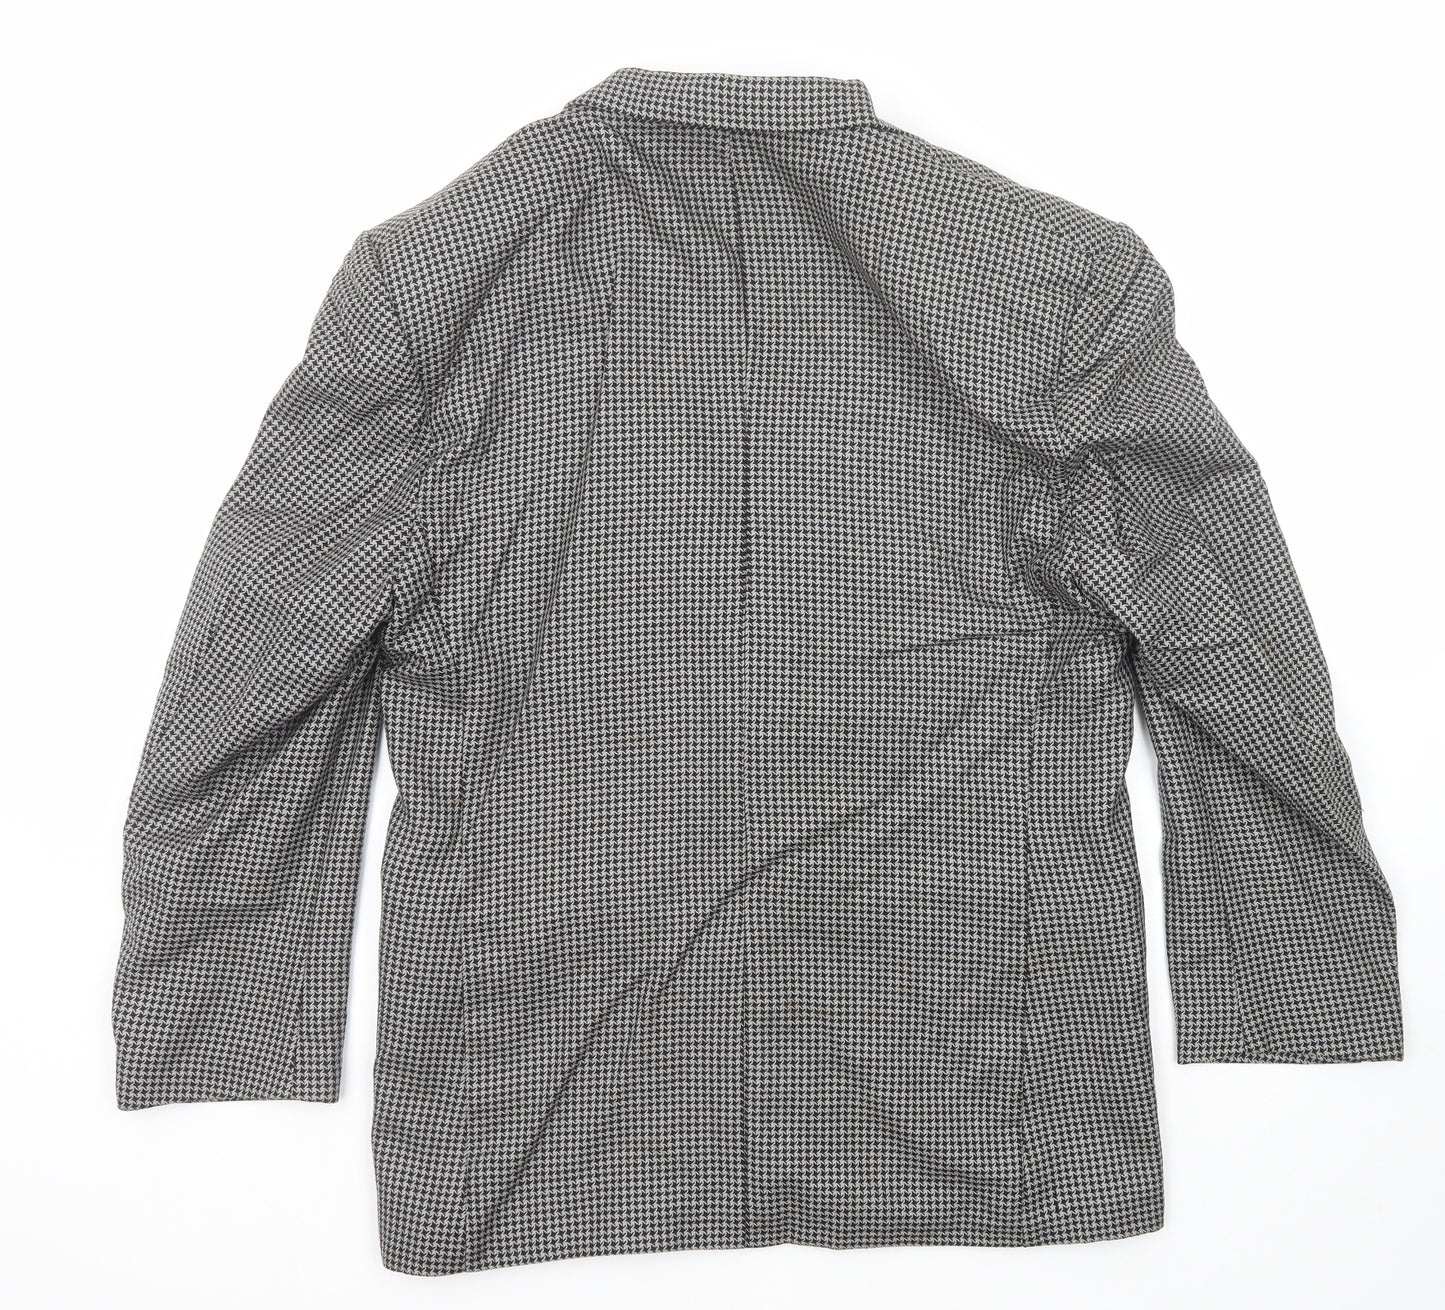 Ciro Citterio Mens Black Wool Jacket Suit Jacket Size 40 Regular